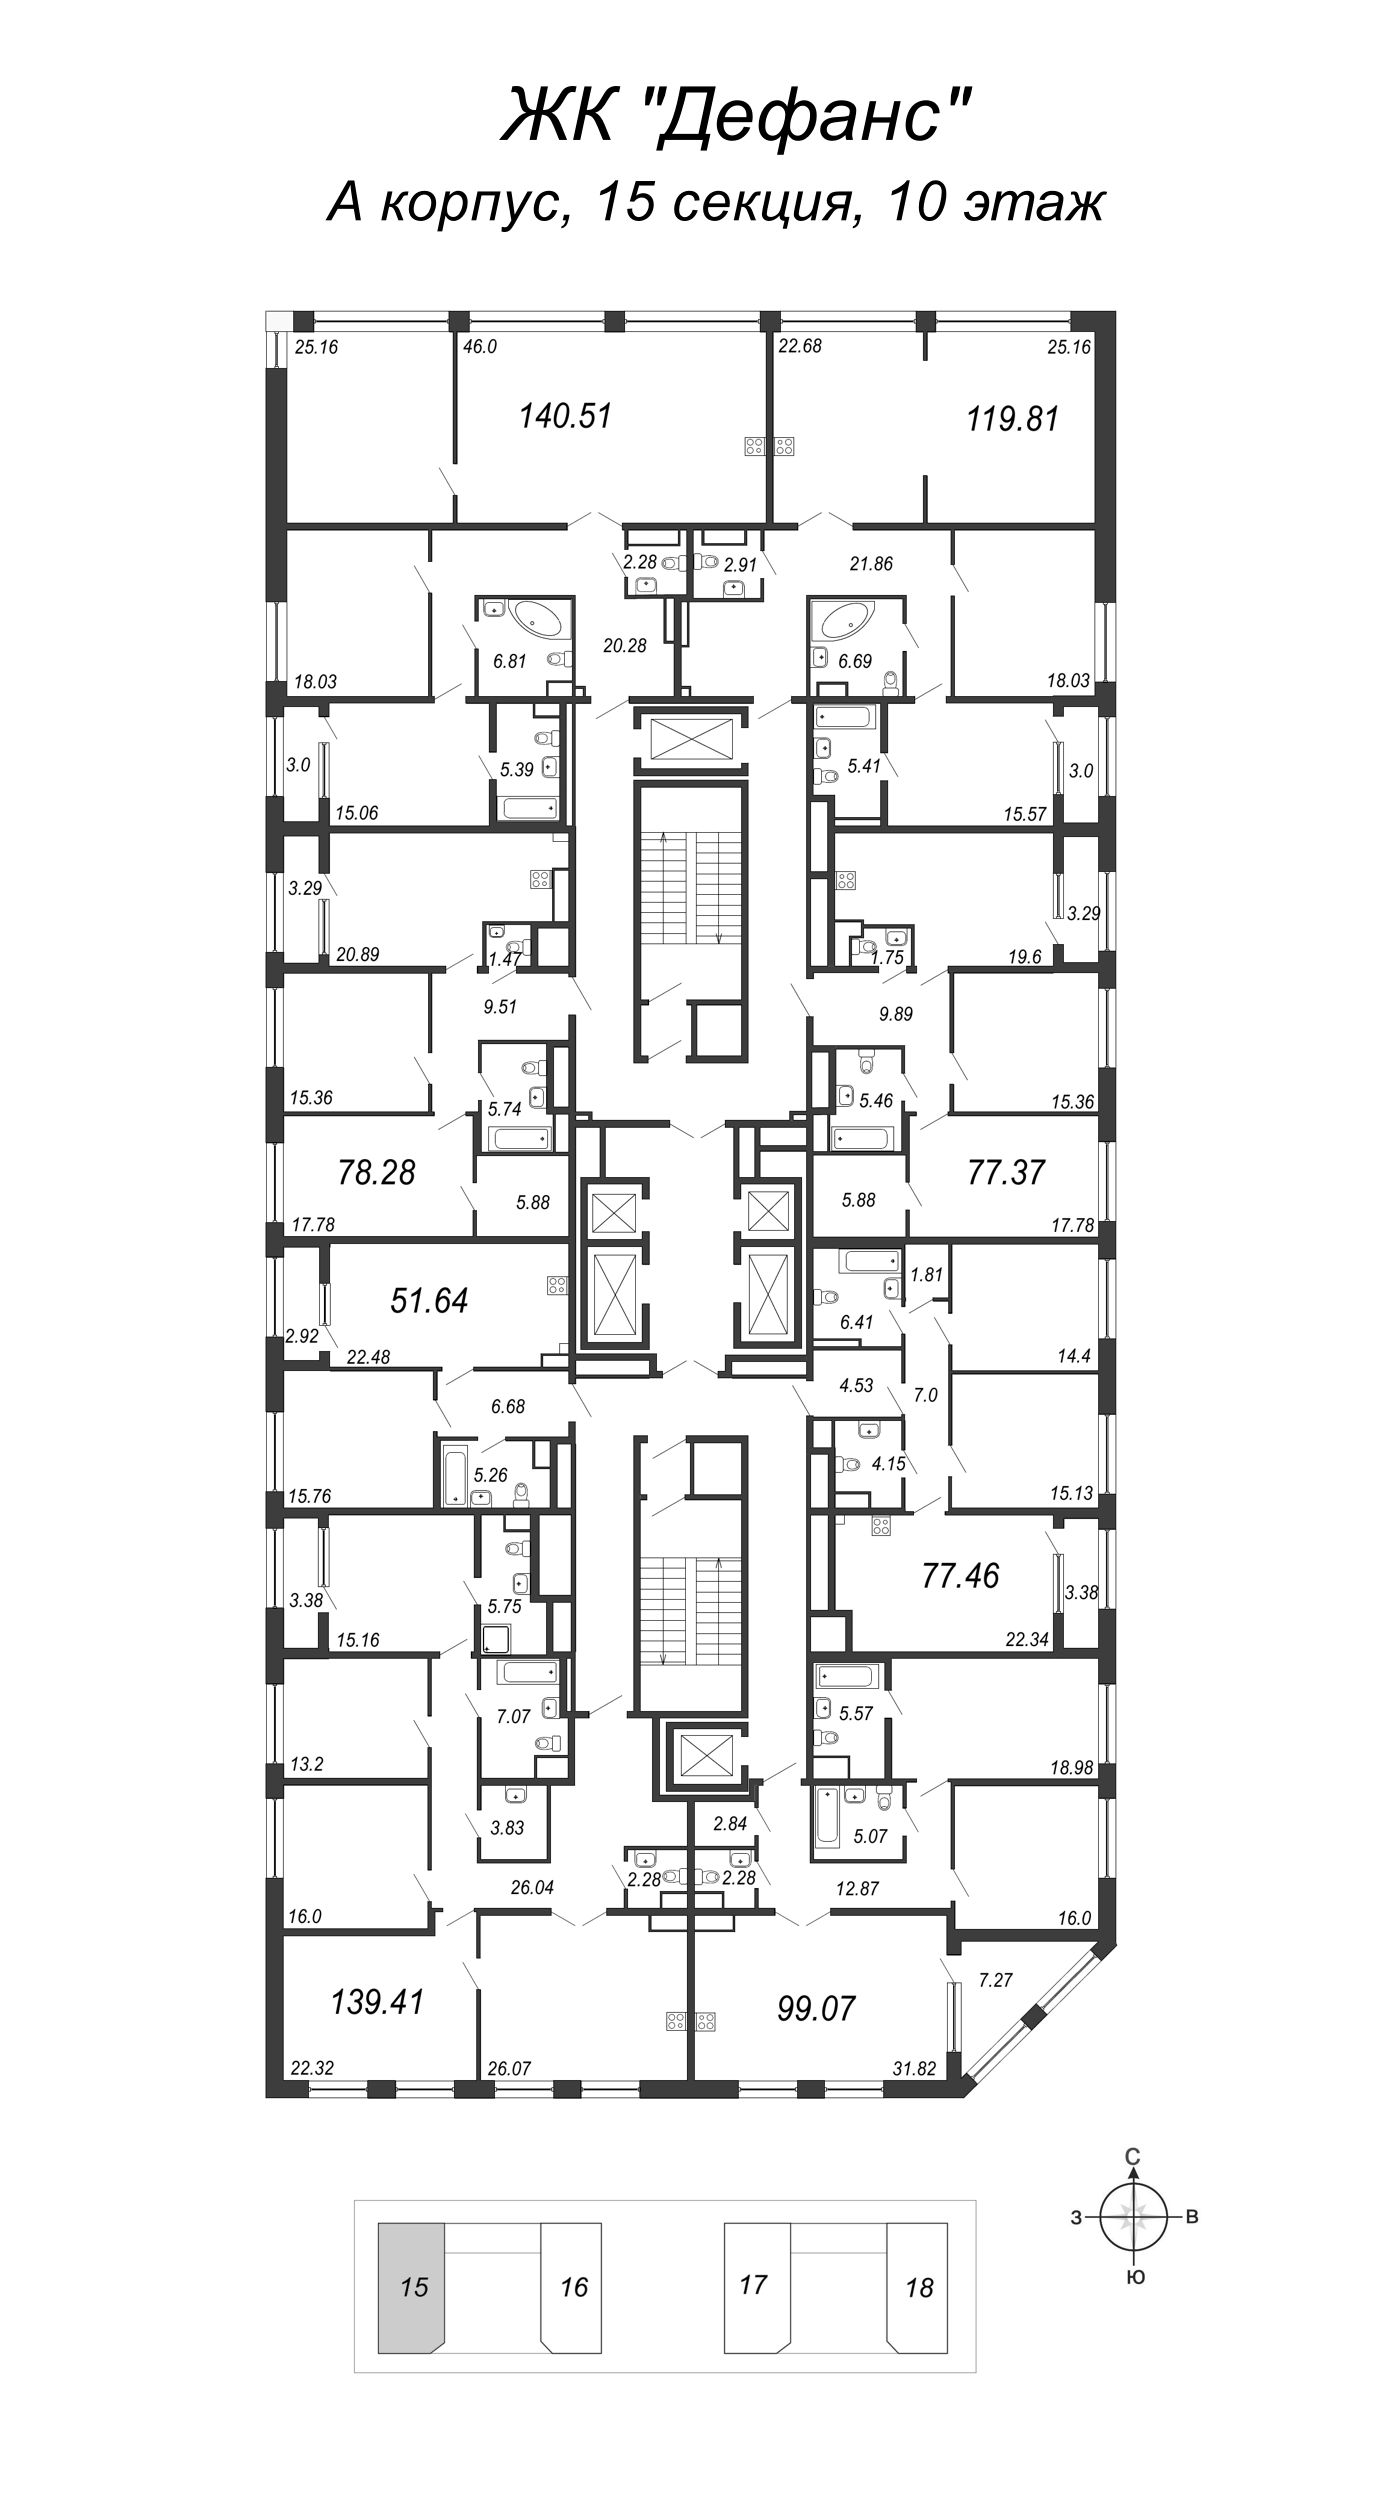 3-комнатная (Евро) квартира, 77.46 м² - планировка этажа